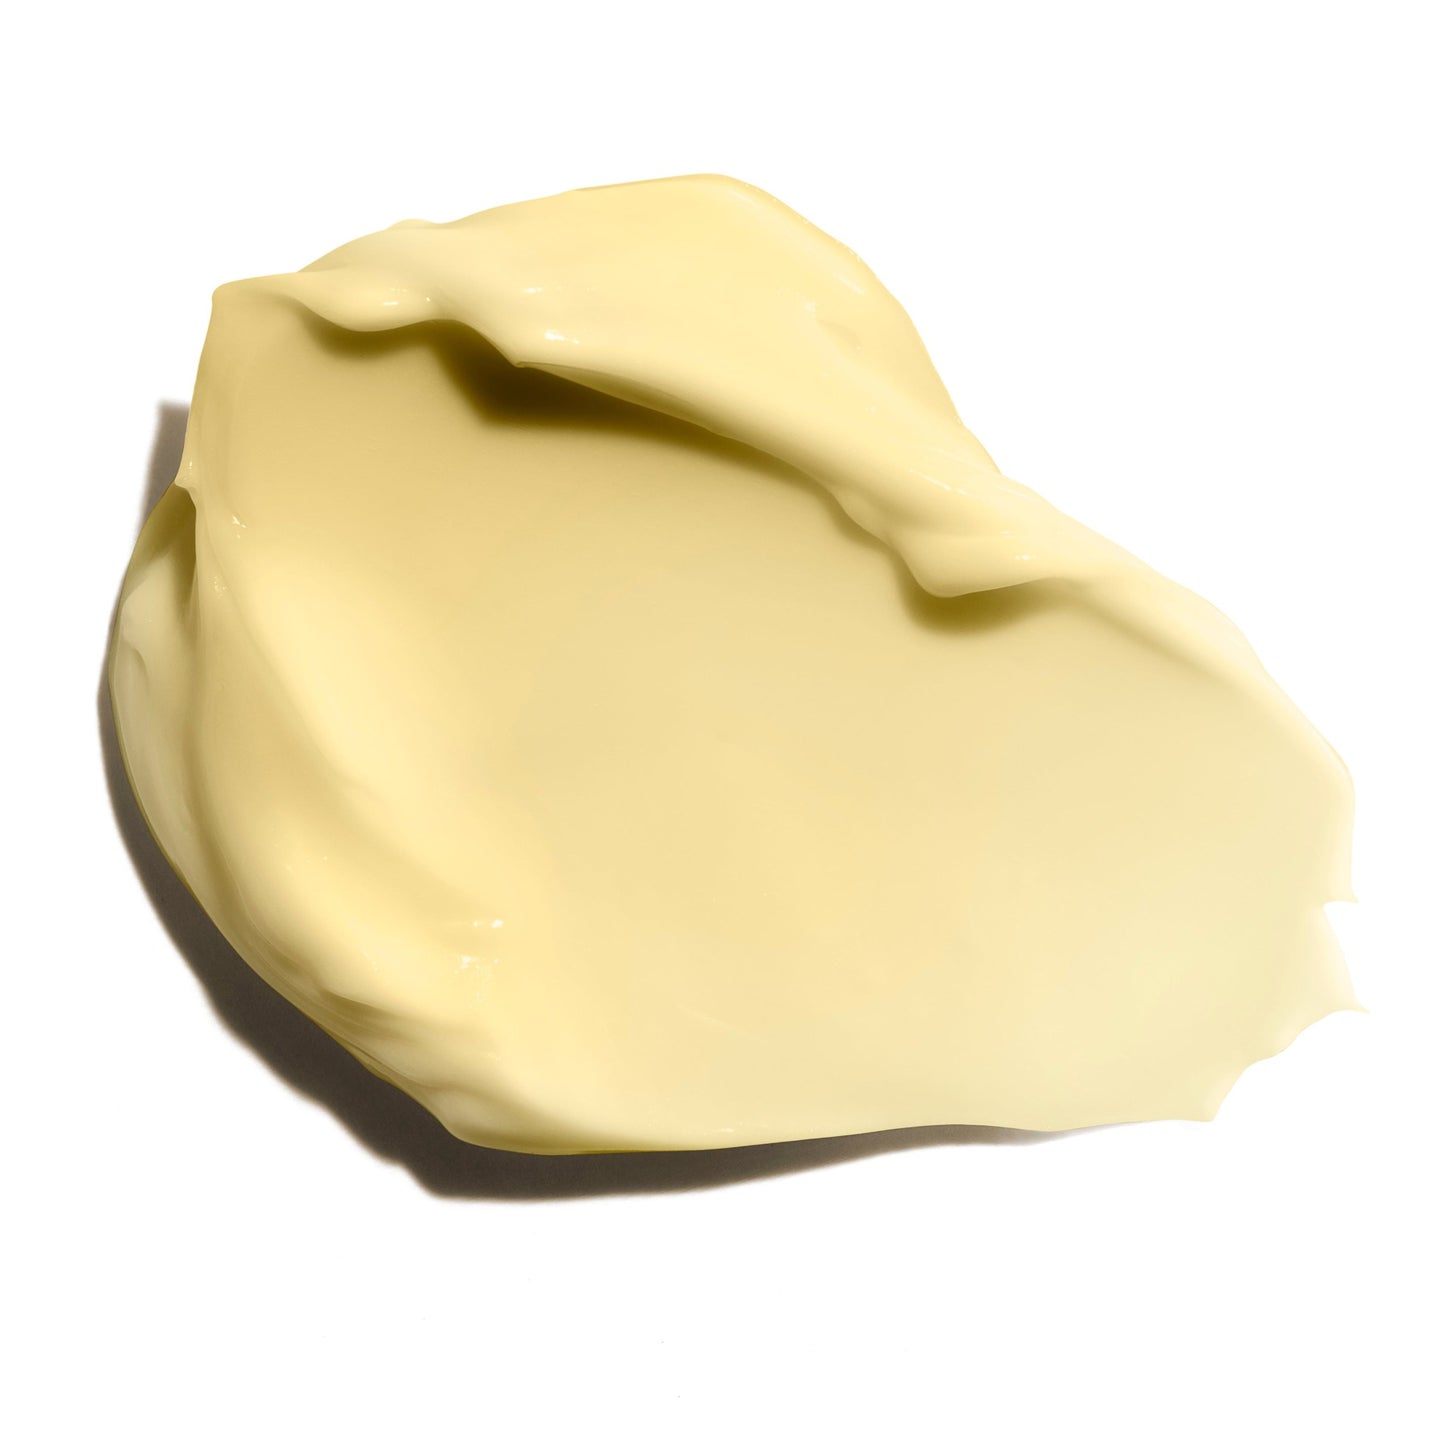 HP Nimni Night Cream - Patented Collagen Support Complex